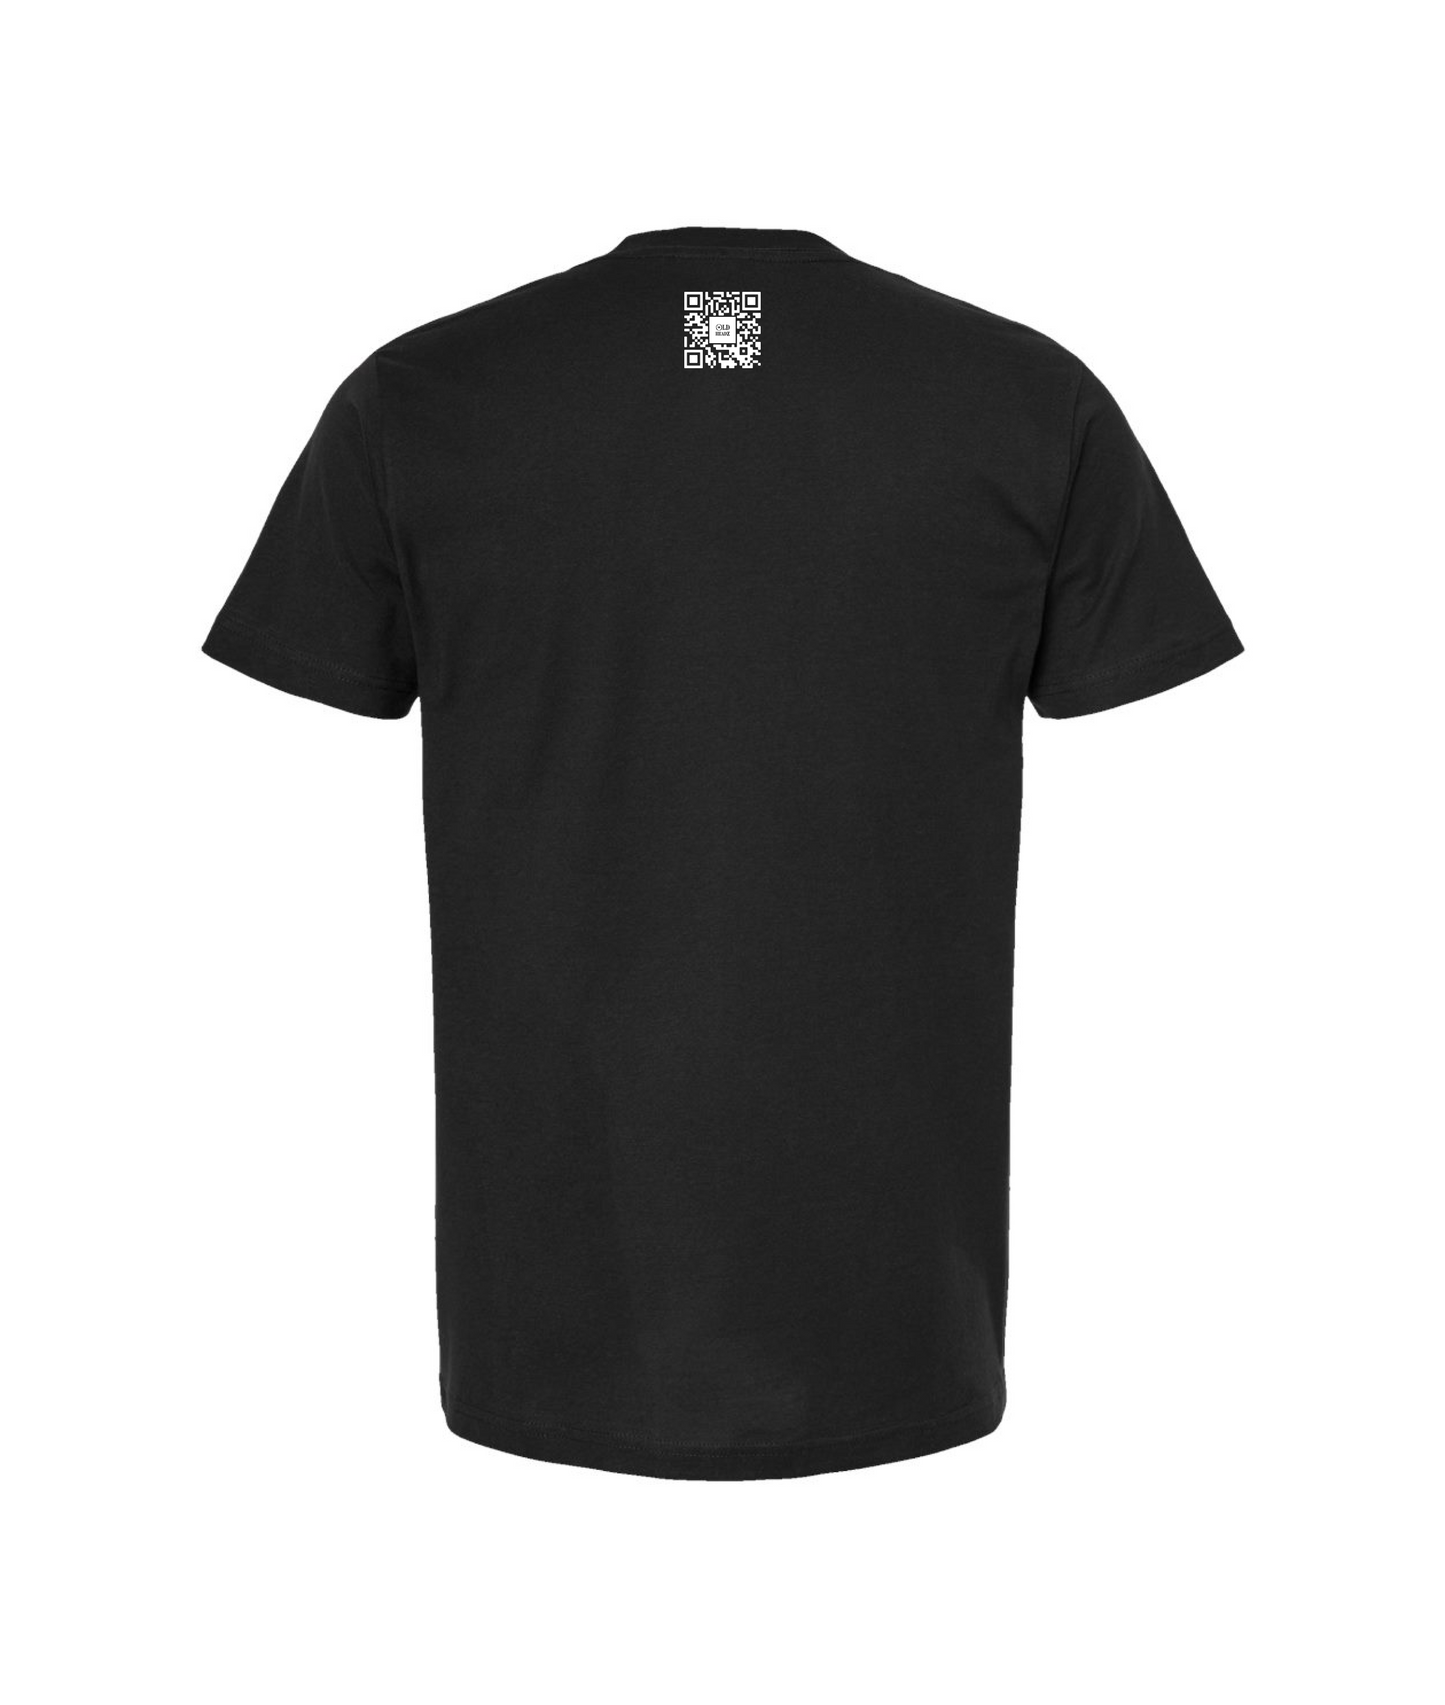 The Old Headz - DESIGN 2 - Black T Shirt